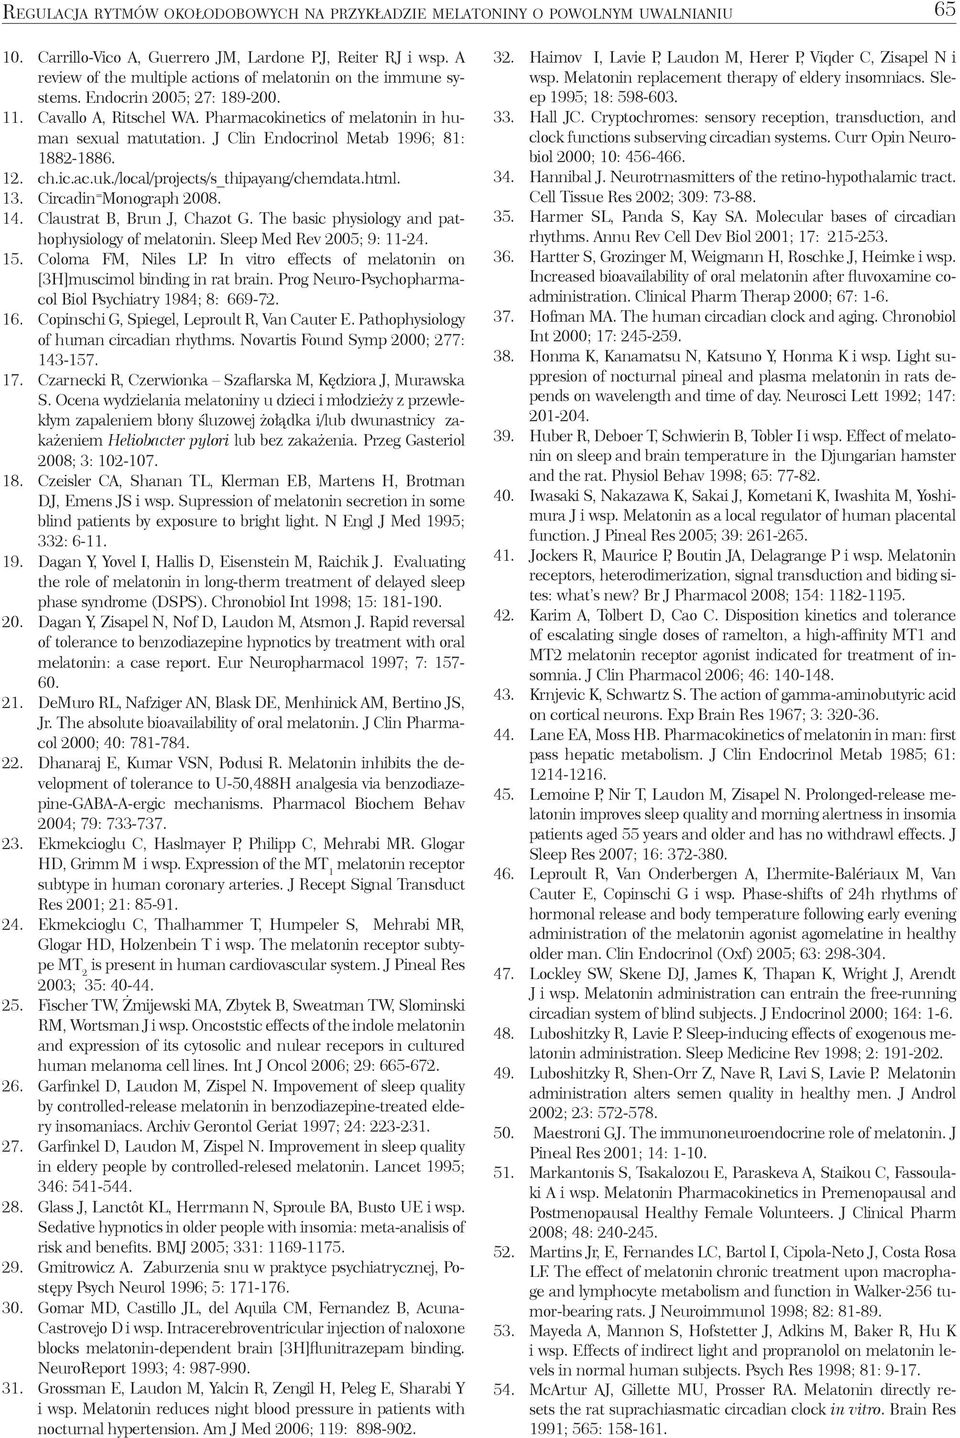 J Clin Endocrinol Metab 1996; 81: 1882-1886. 12. ch.ic.ac.uk./local/projects/s_thipayang/chemdata.html. 13. Circadin = Monograph 2008. 14. Claustrat B, Brun J, Chazot G.